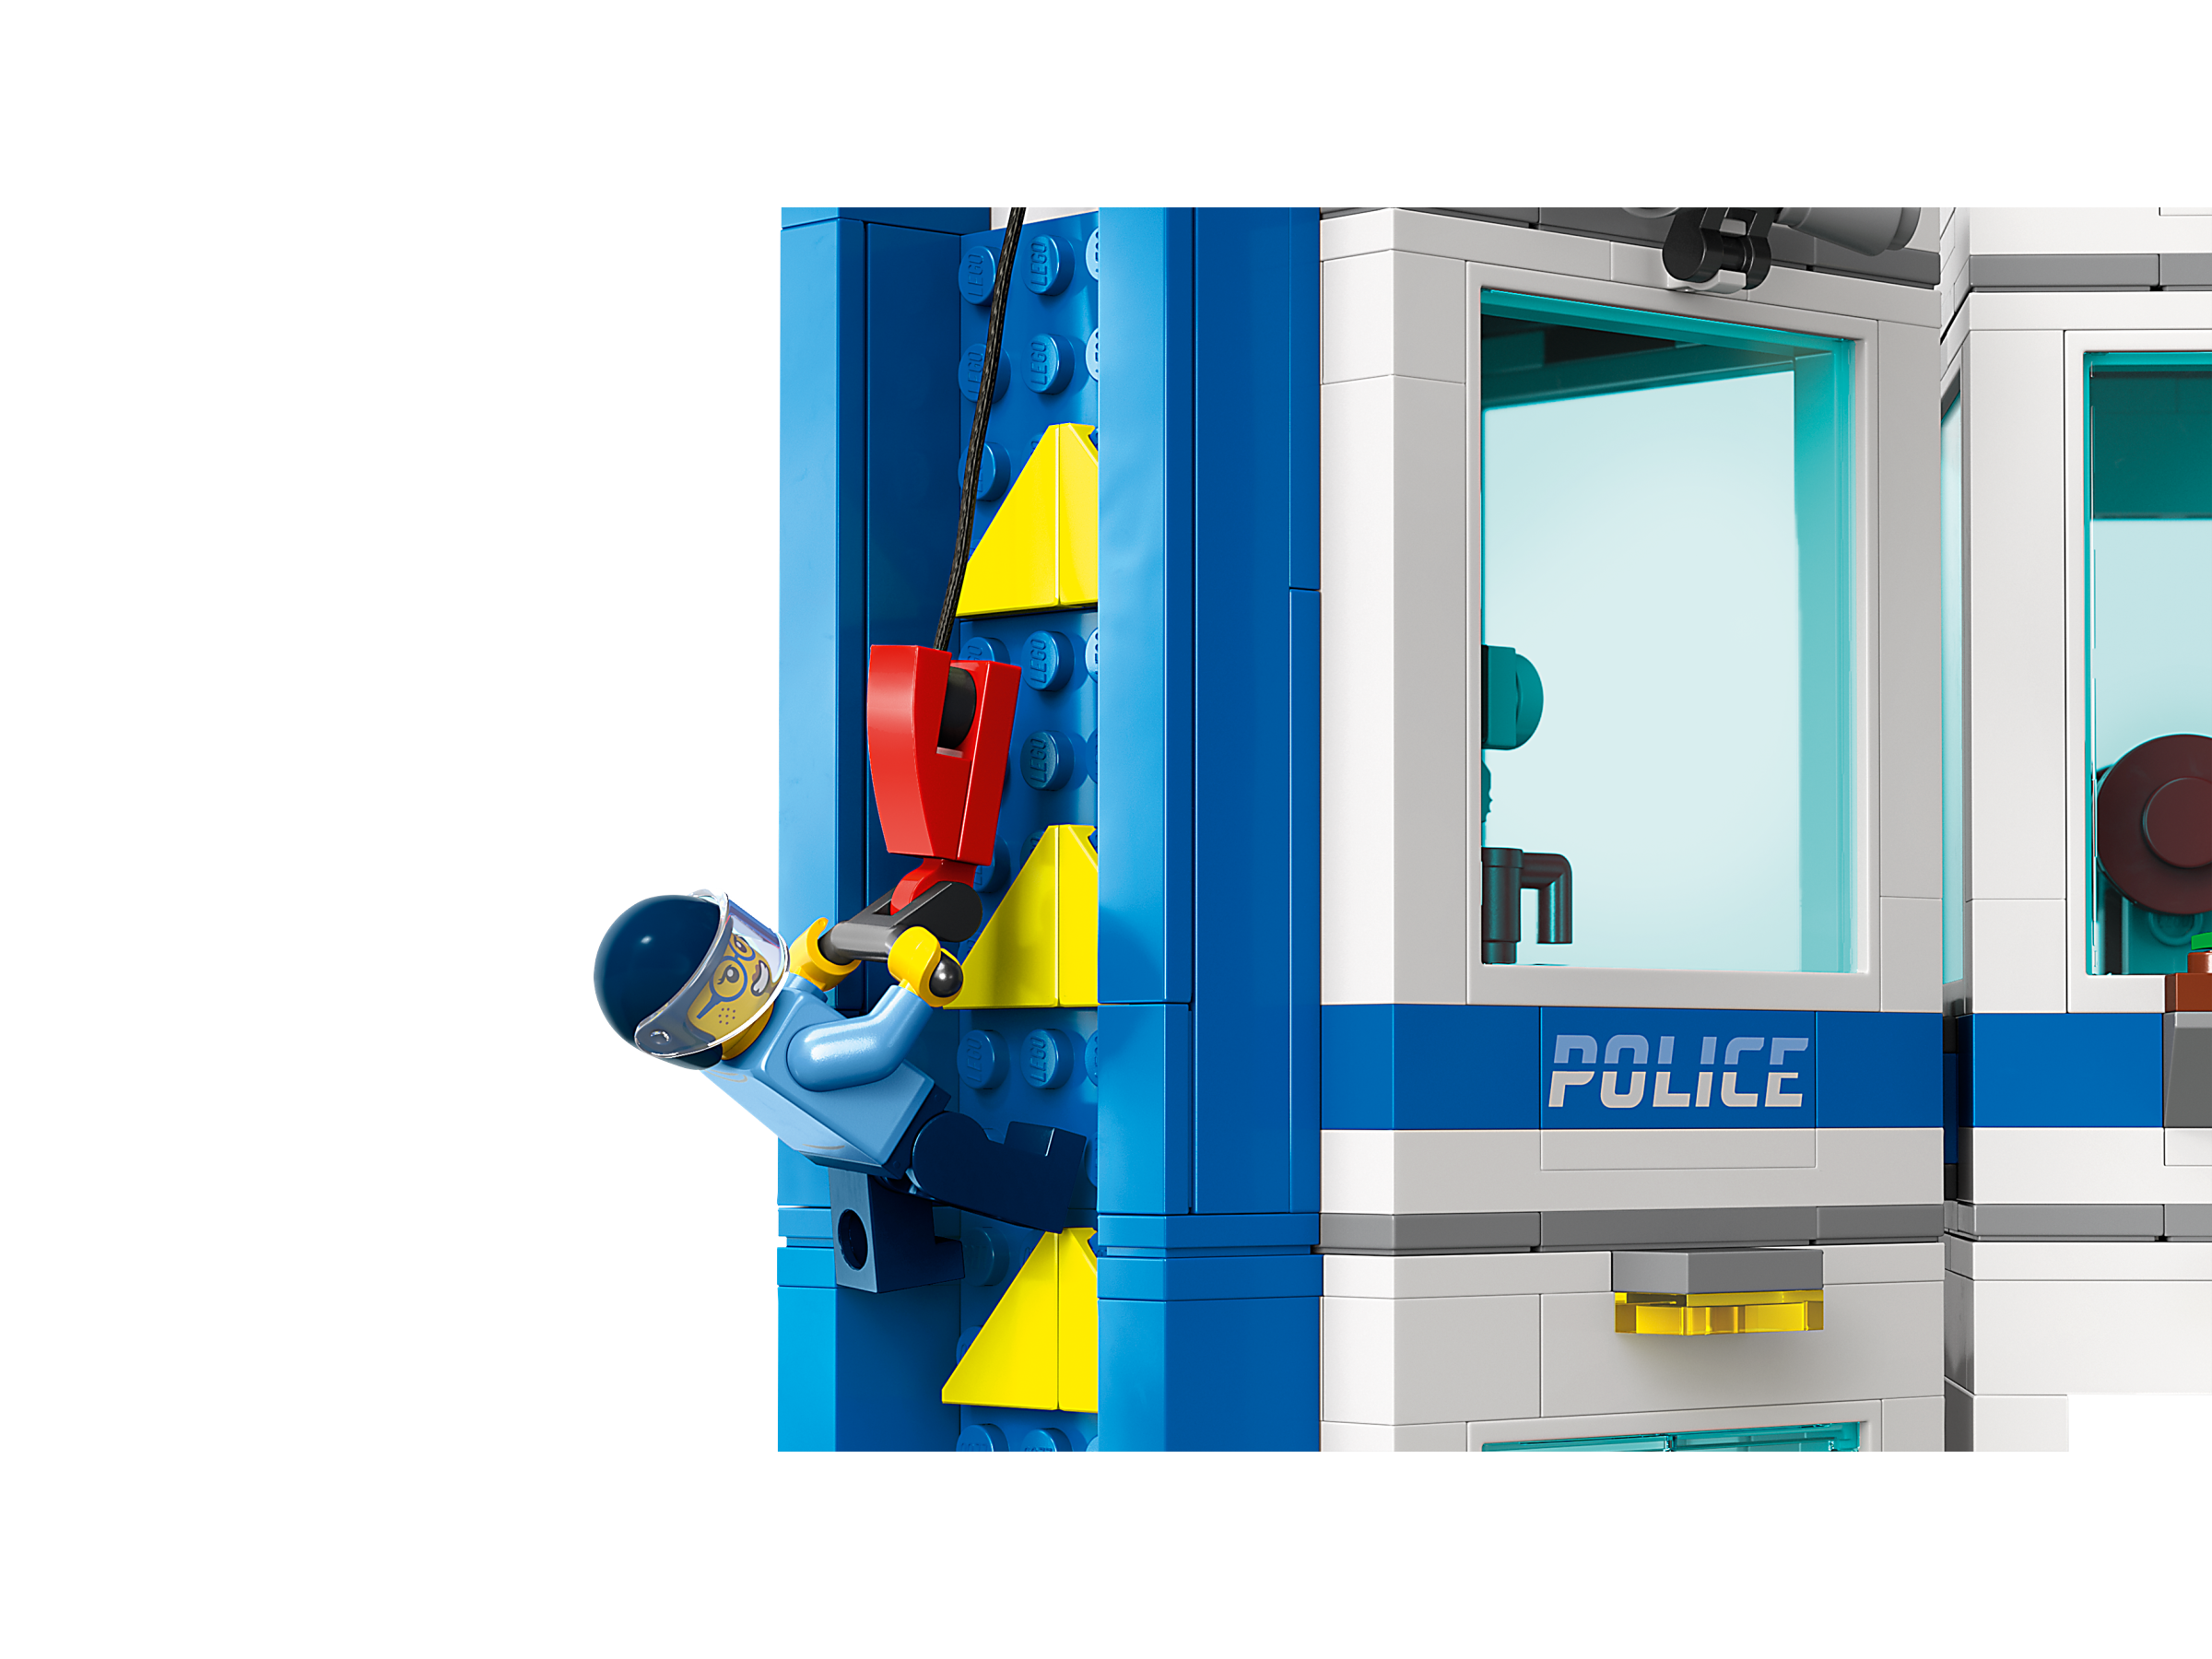 Le laboratoire de police scientifique mobile Lego